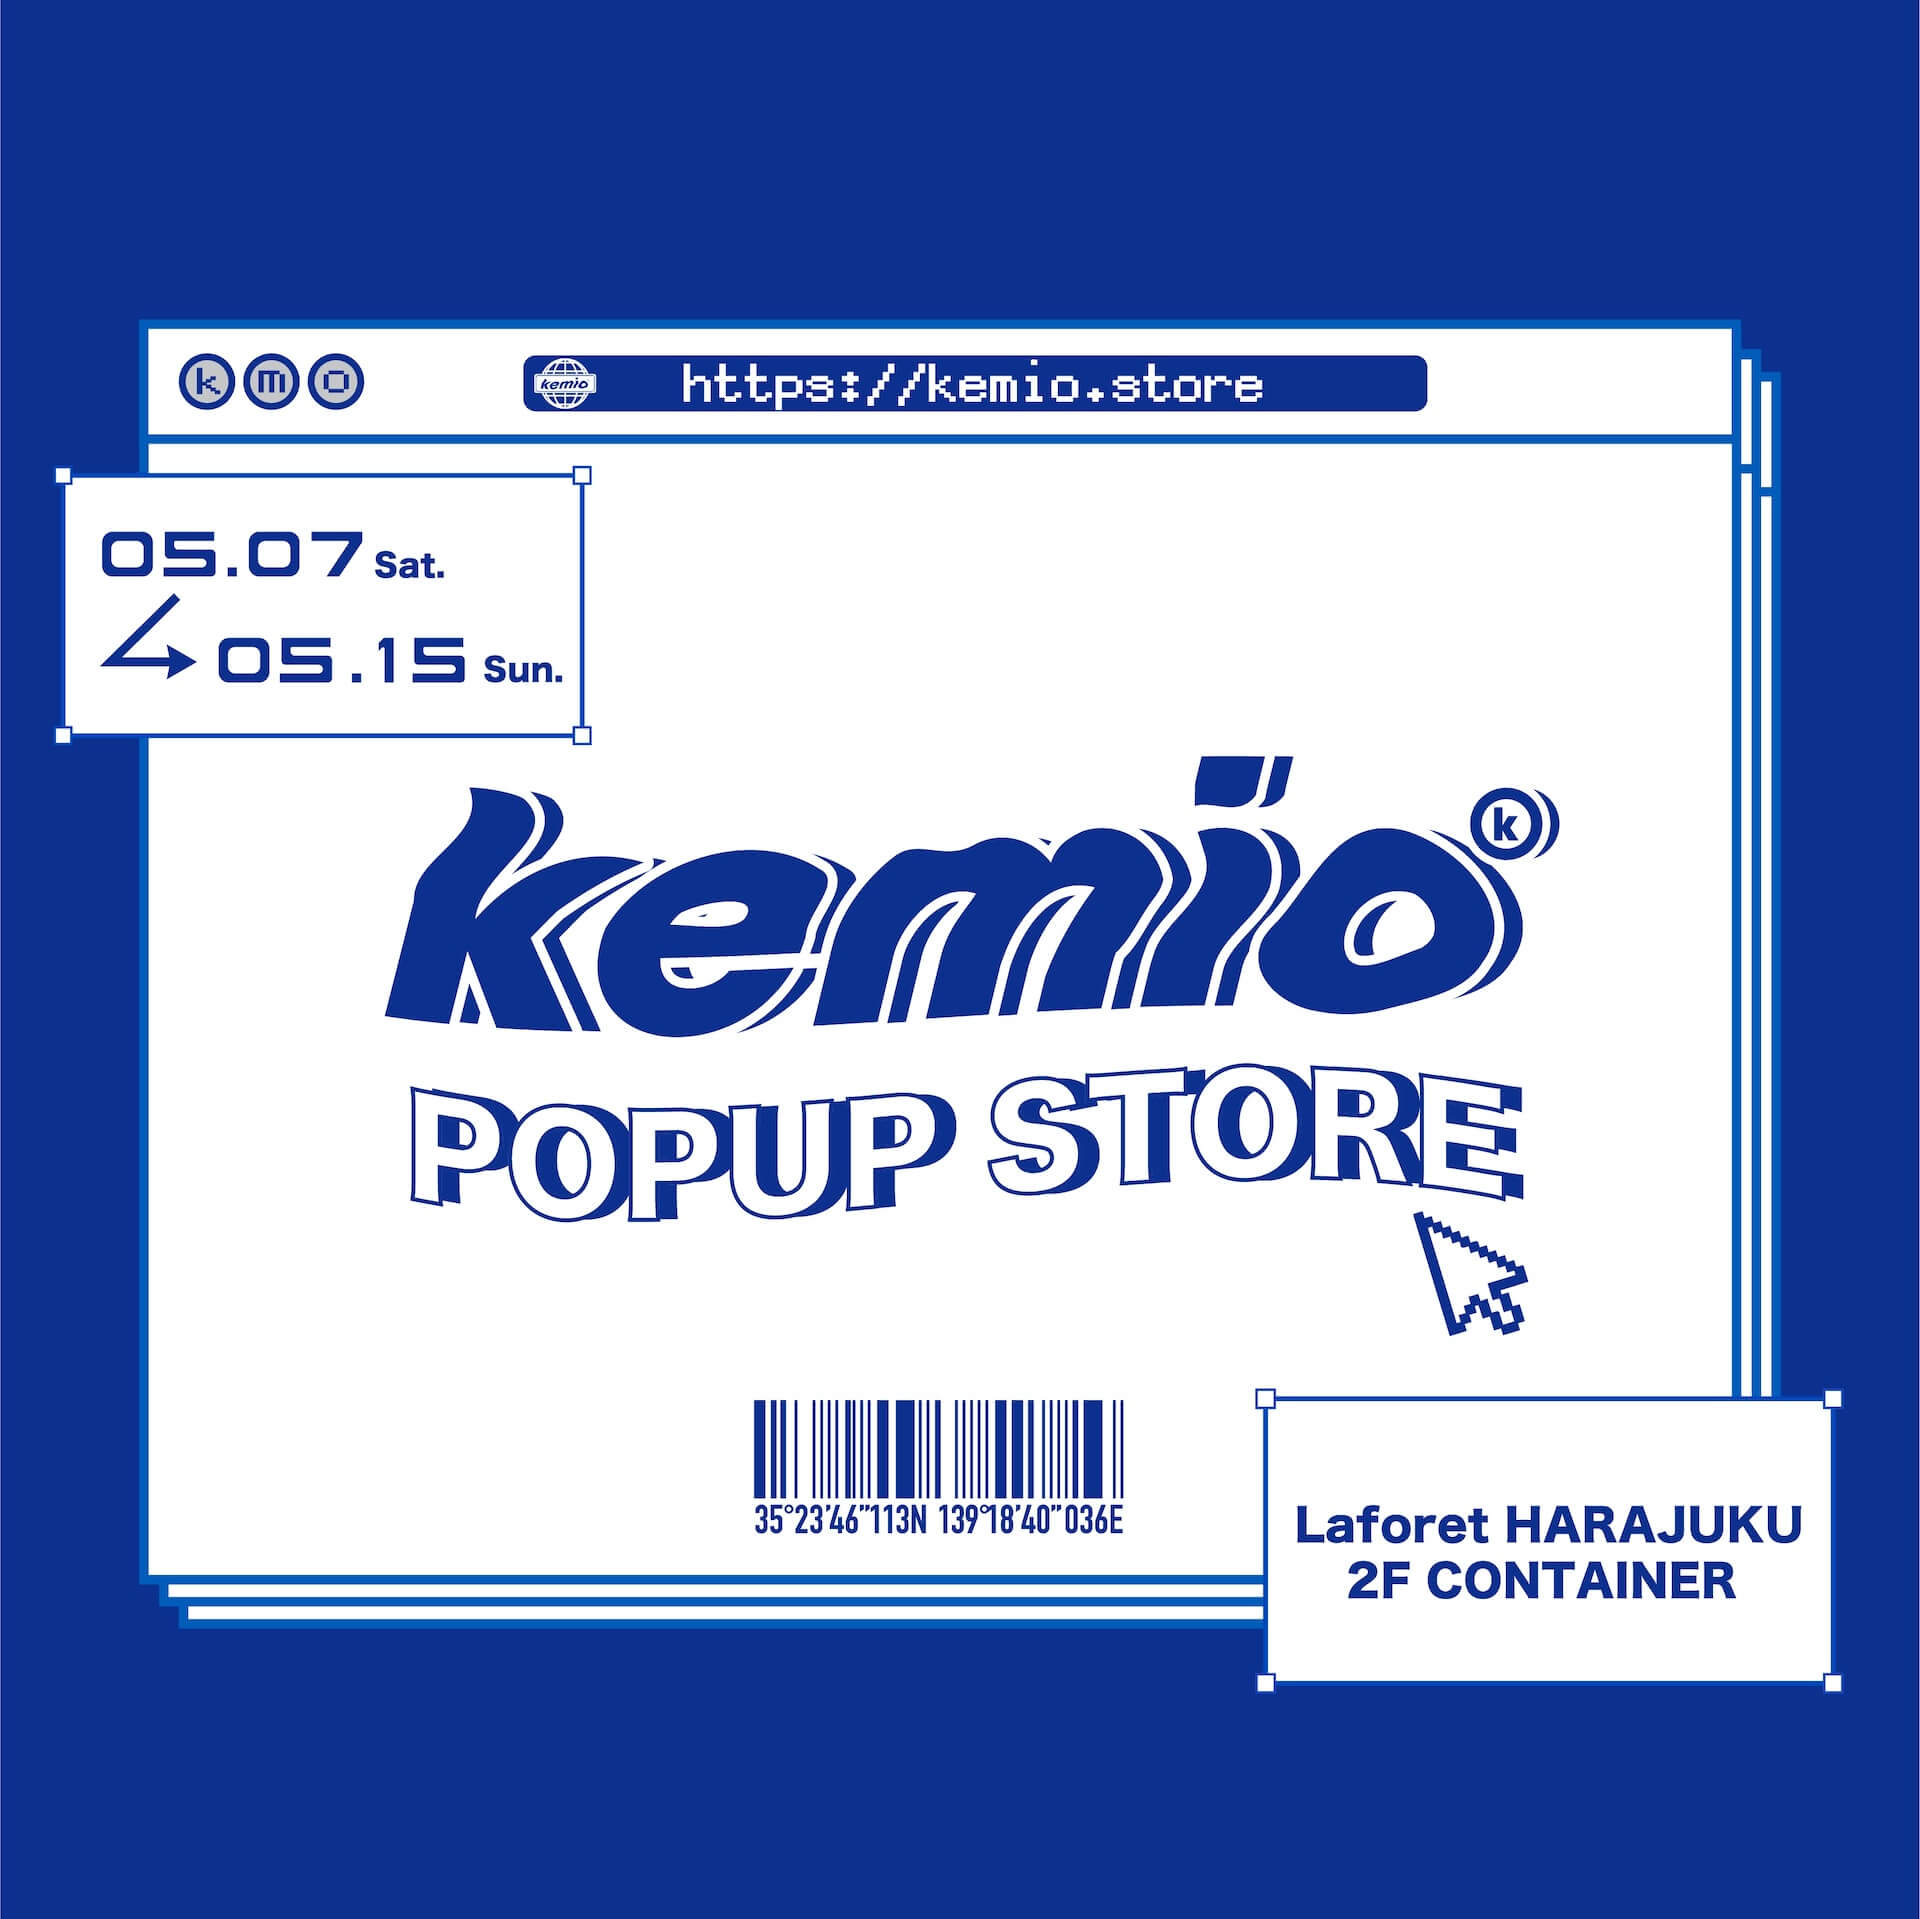 kemioプロデュース「kemio store」初のポップアップショップでパラッパラッパーとのコラボが実現 fashion220425_kemio-popupstore-01